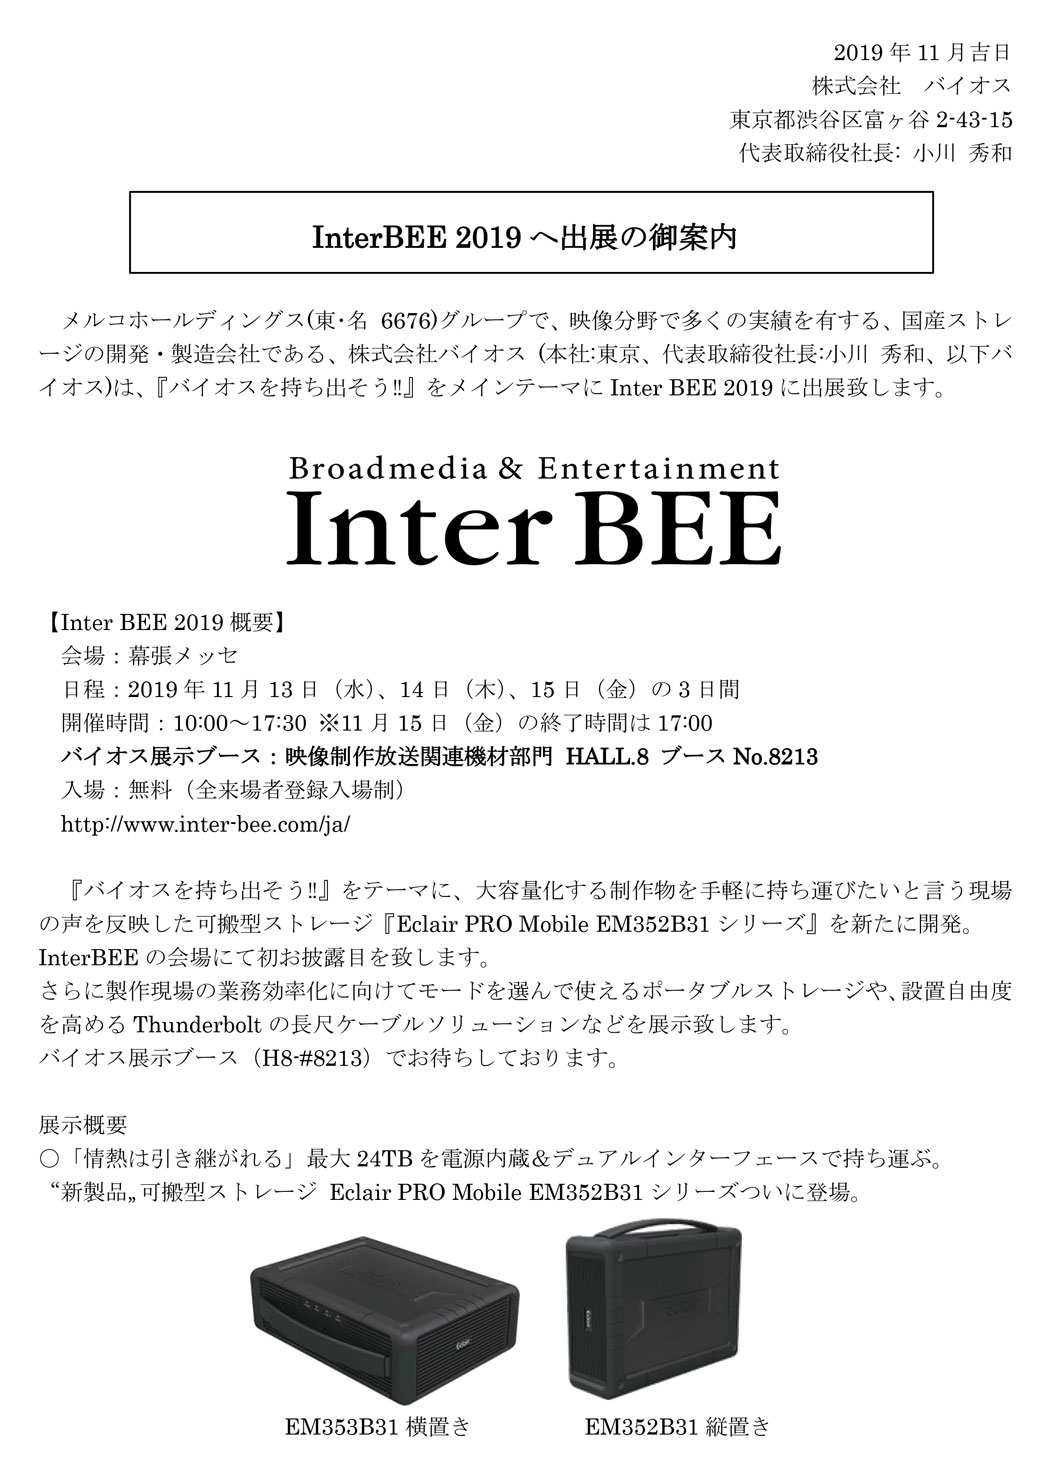 InterBEE2019-Press-Release2-p1A